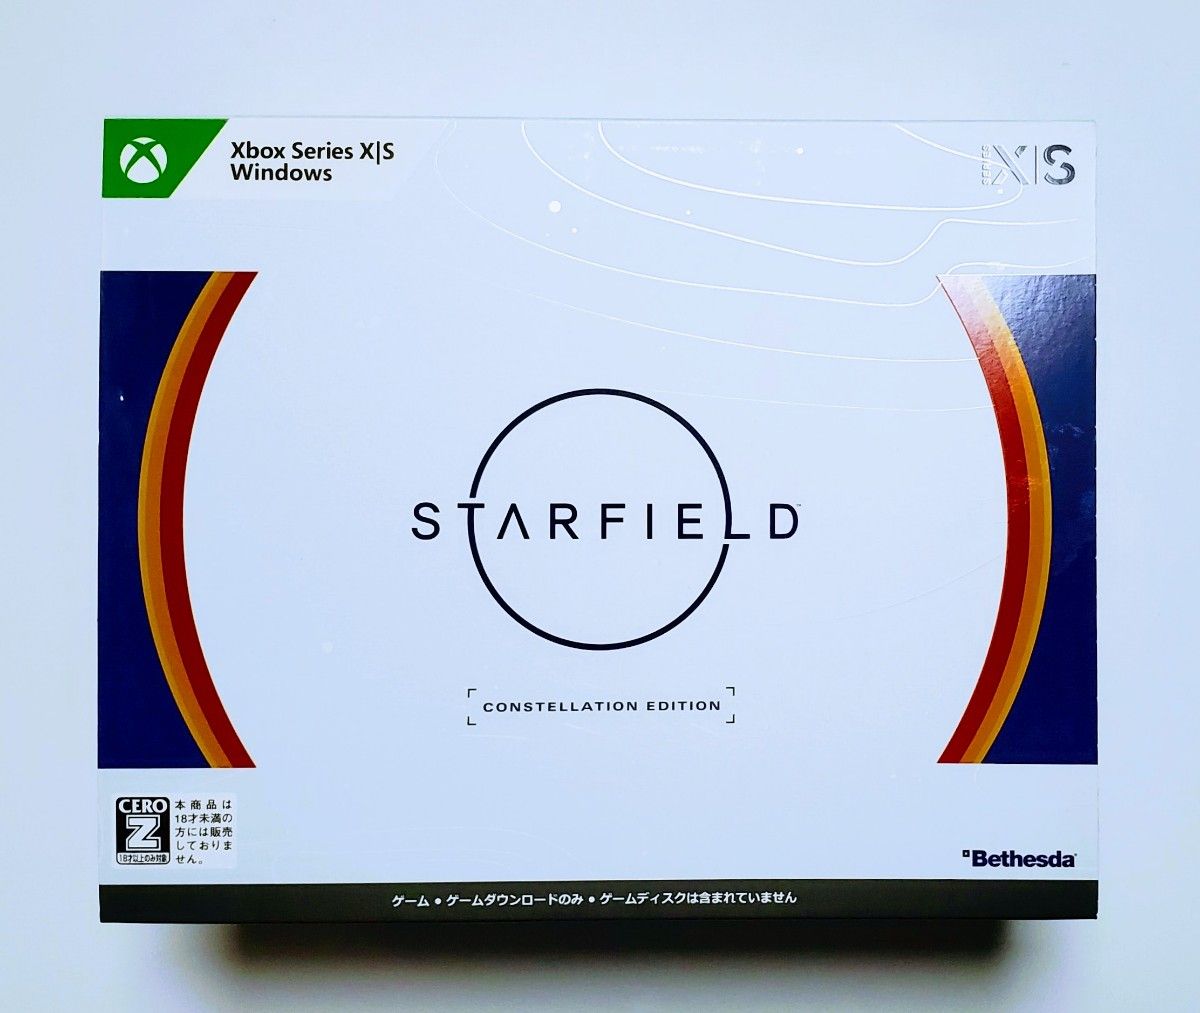 Xbox Series X S STARFIELD CONSTELLATION EDITION スターフィールド